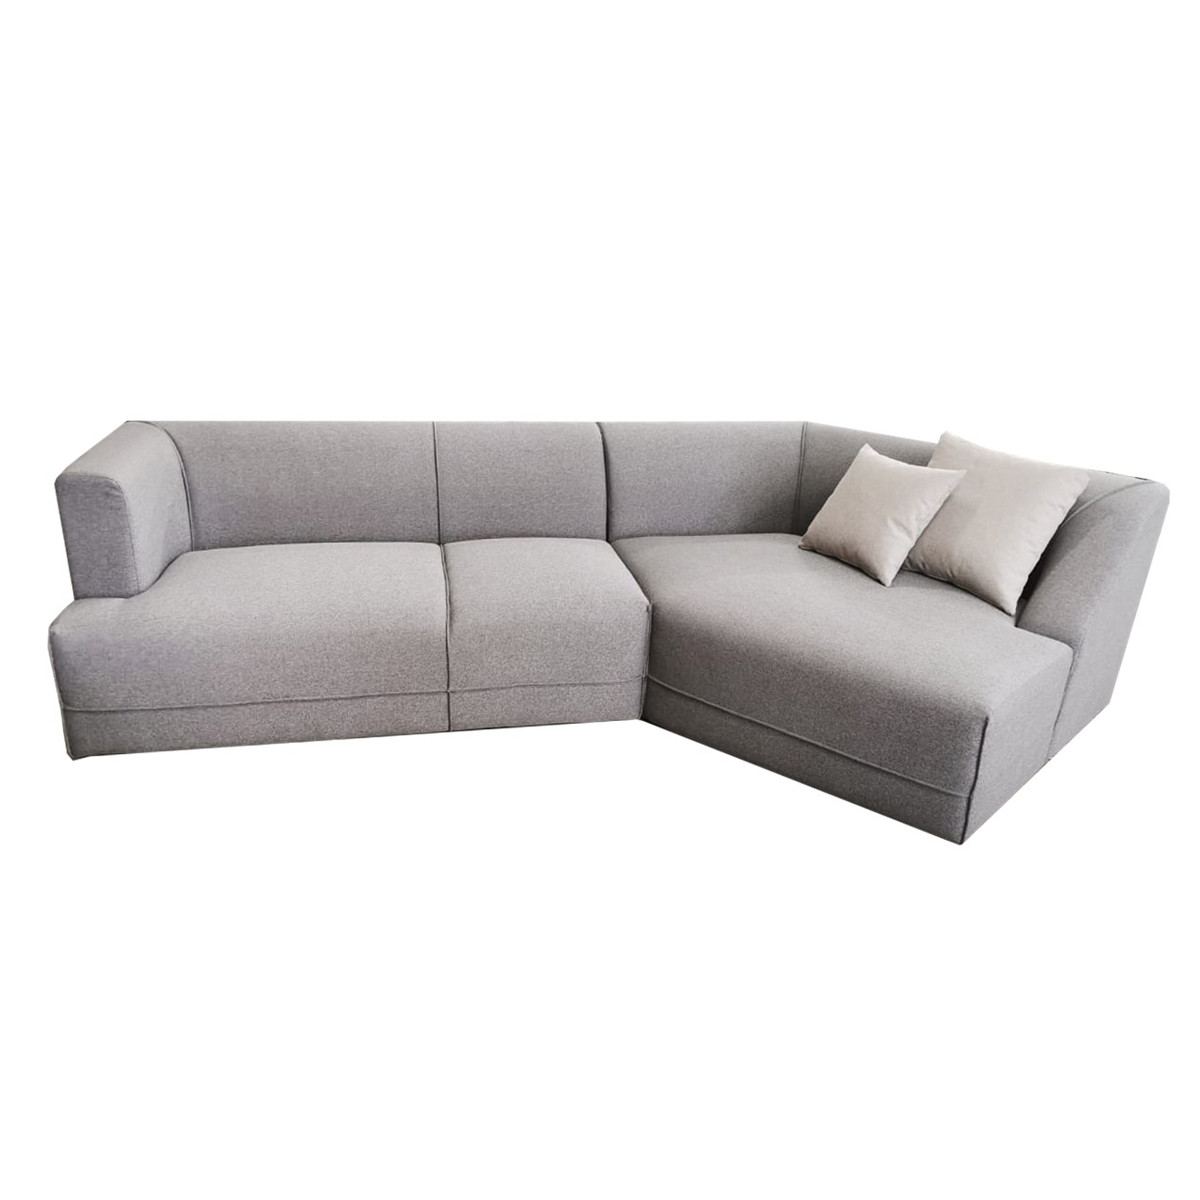 Hetka Corner Sofa 10ft Moredesign Com